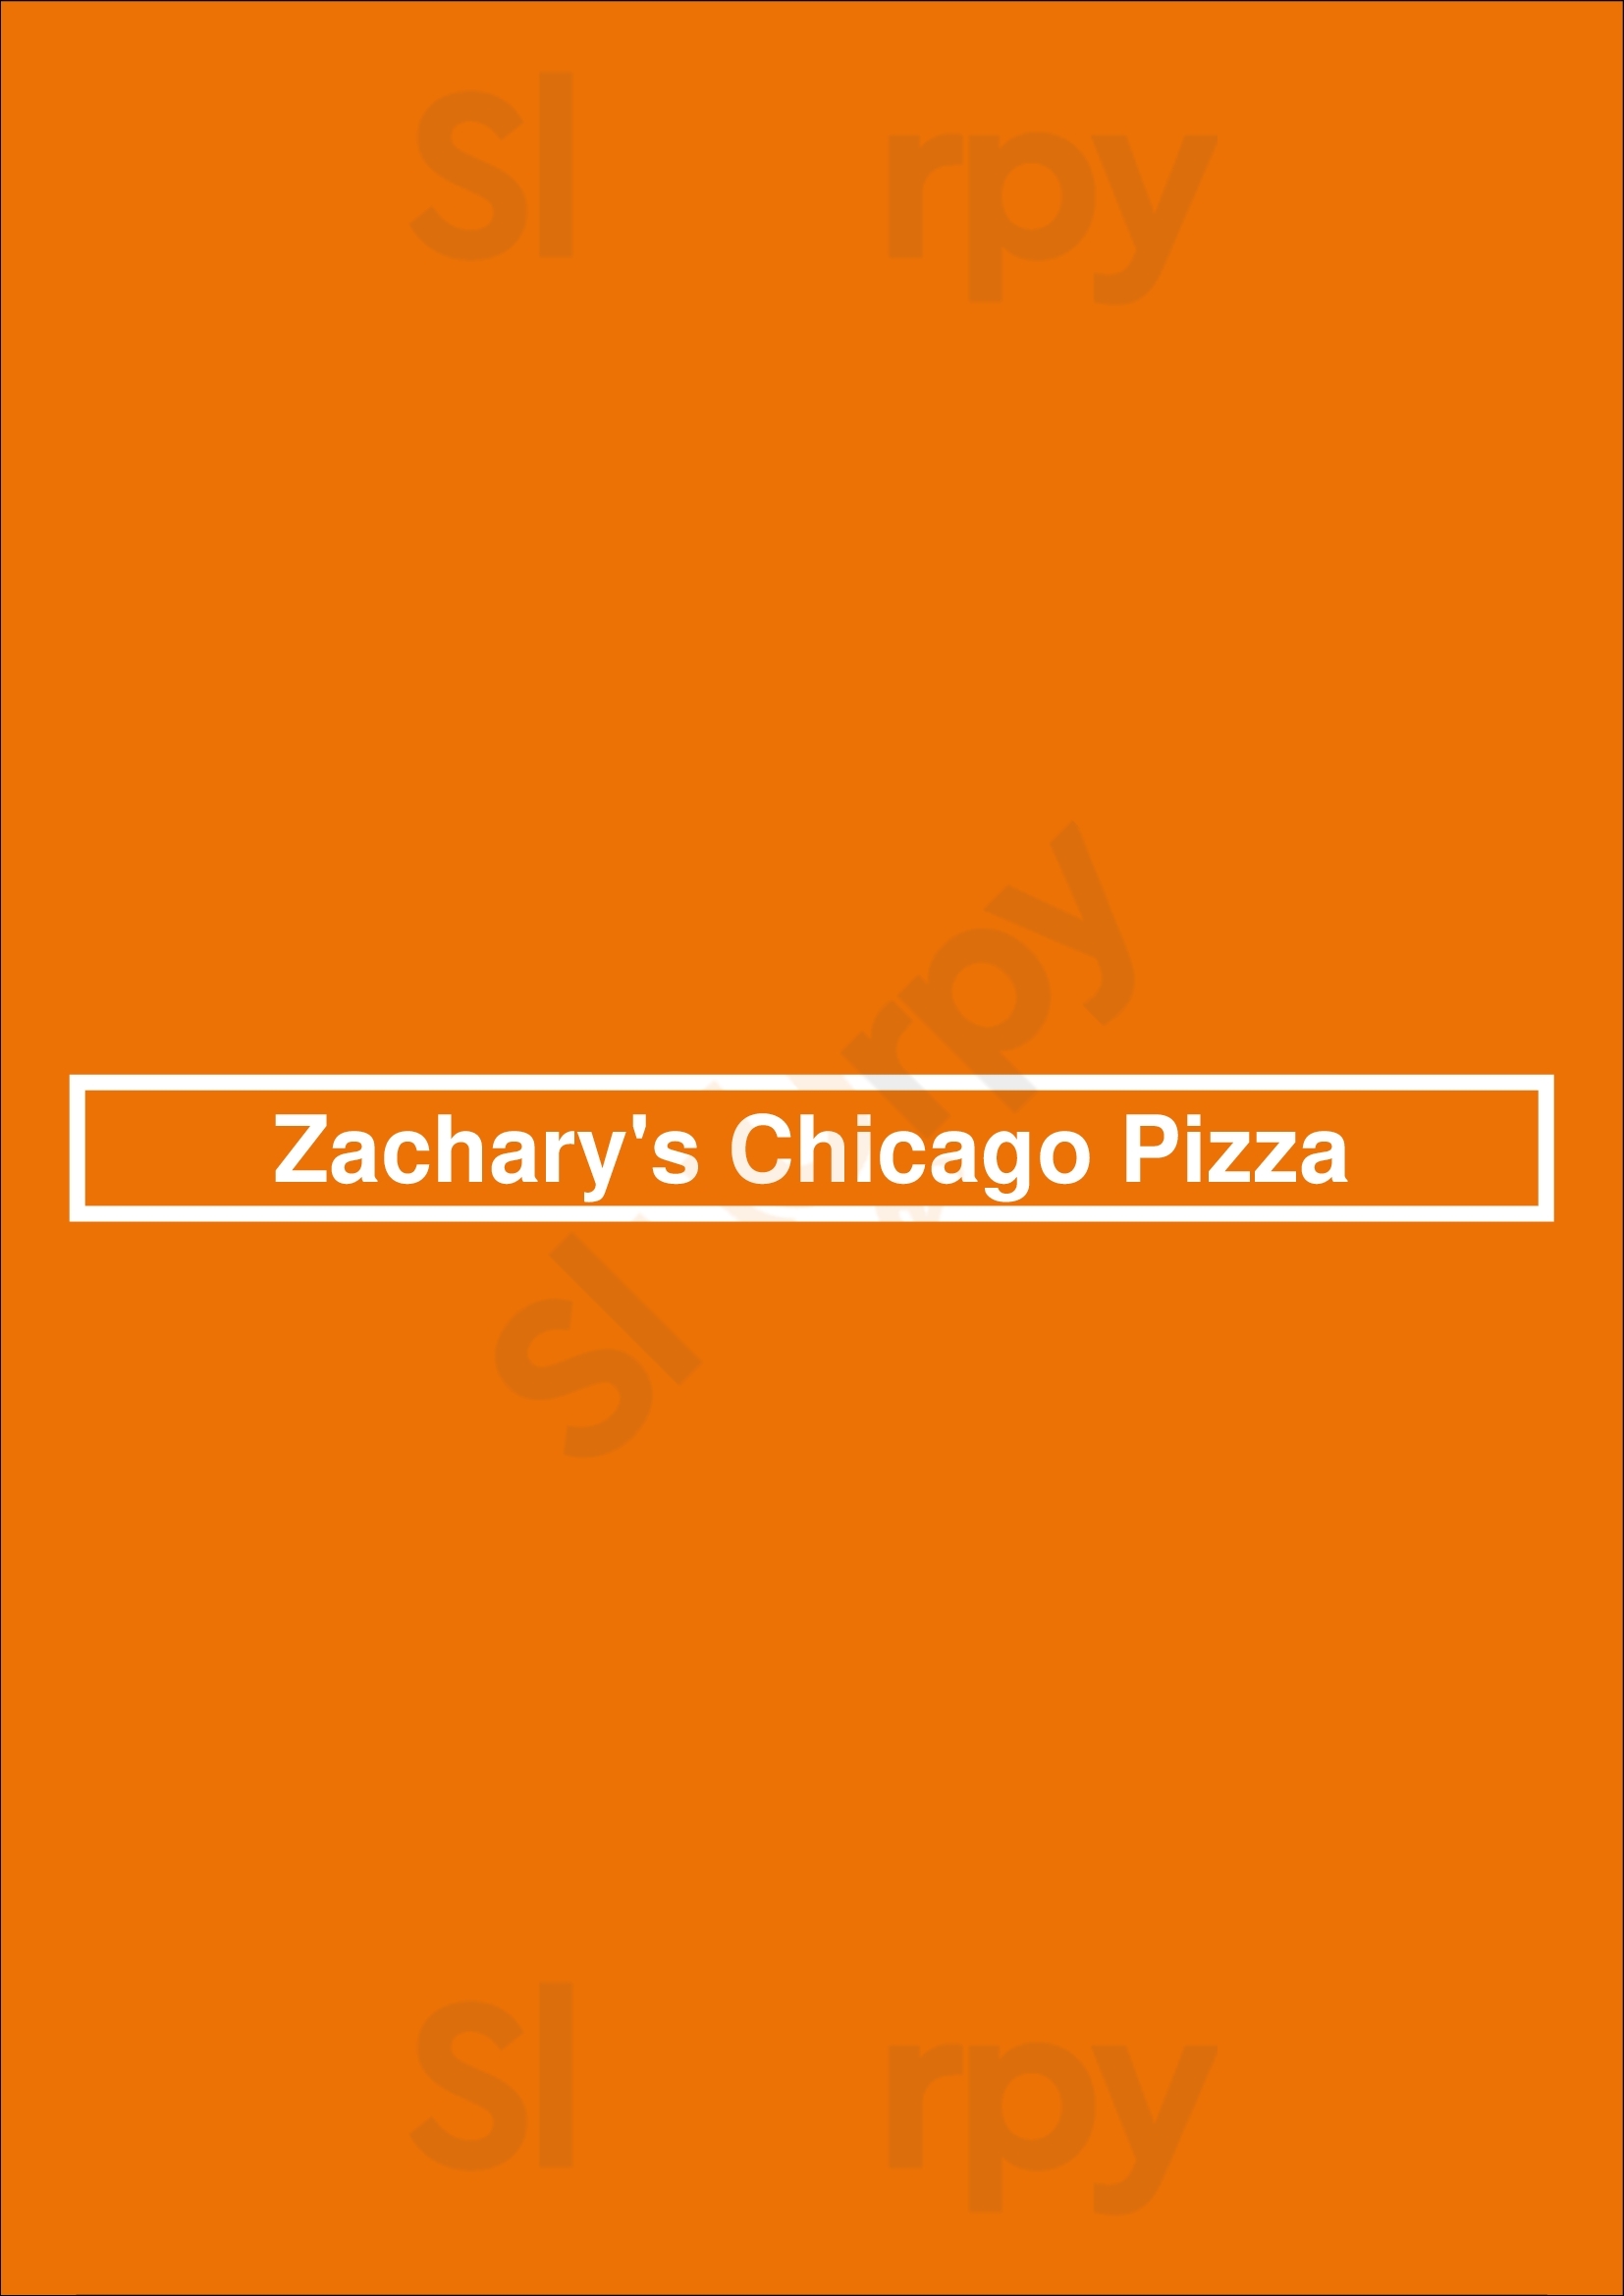 Zachary's Chicago Pizza Oakland Menu - 1